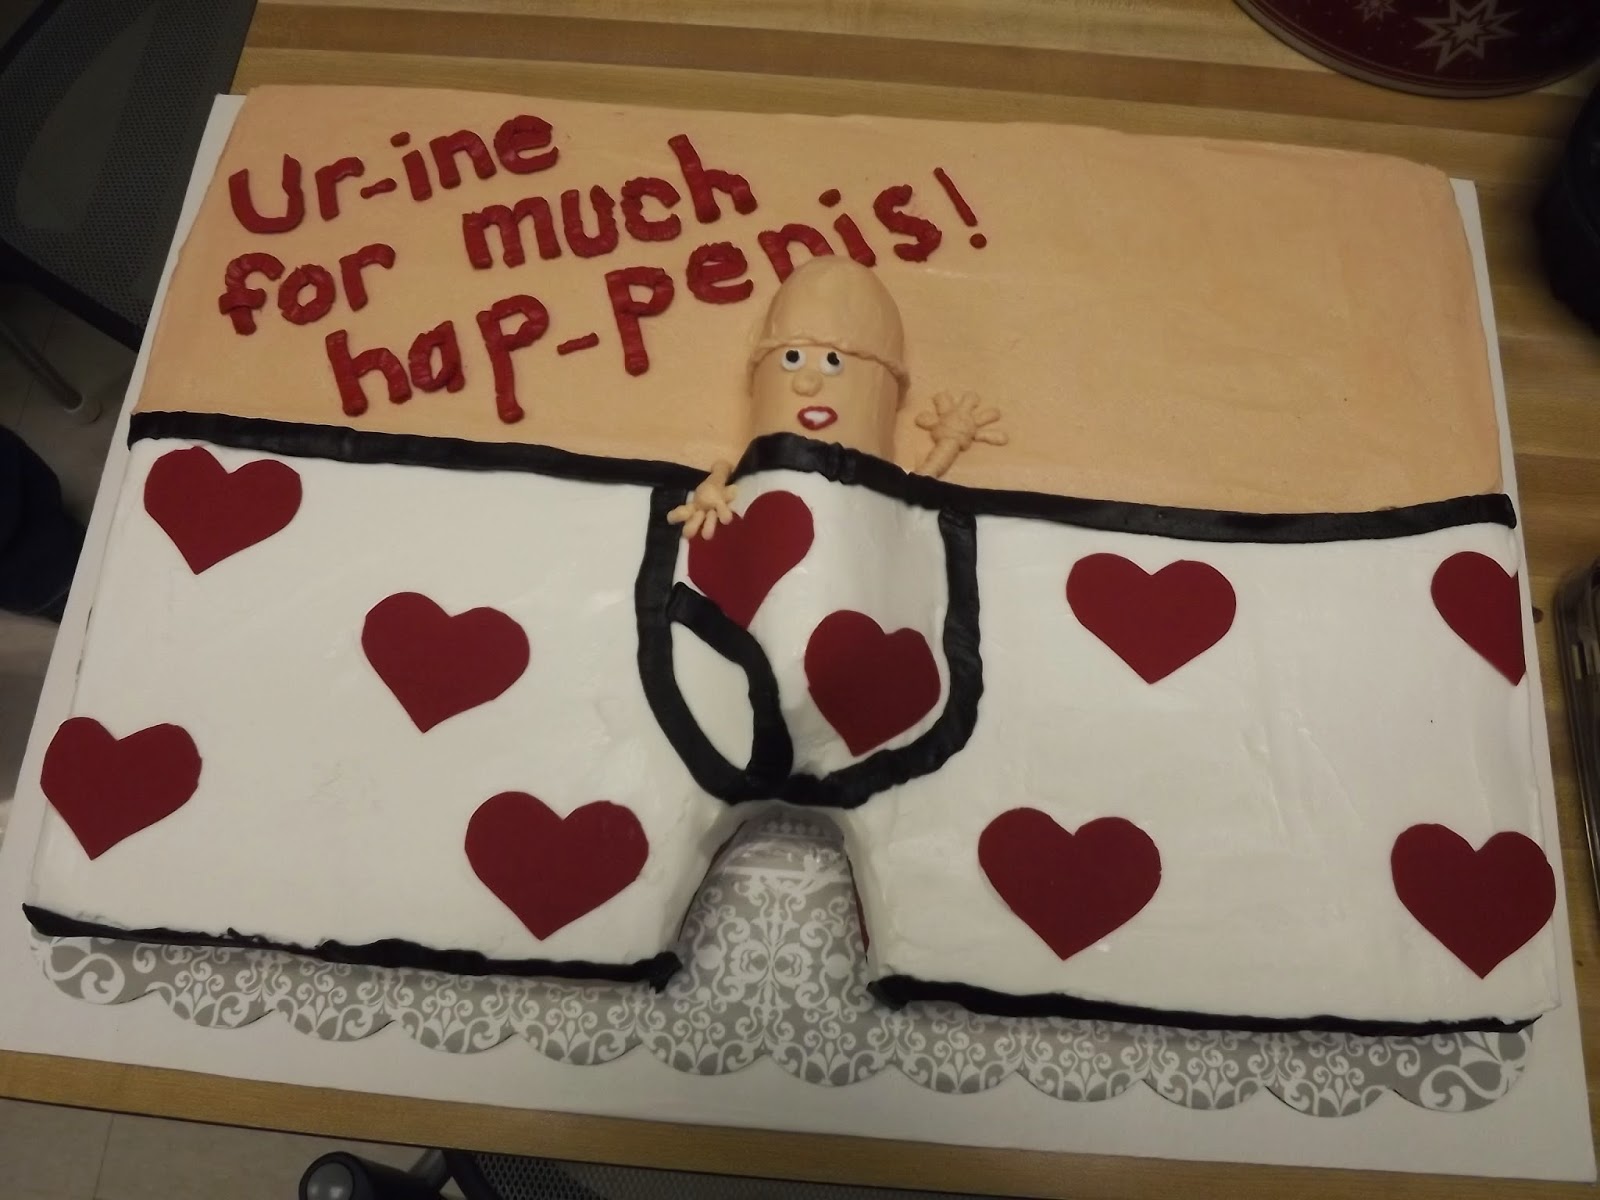 Funny Retirement Cakes Ideas